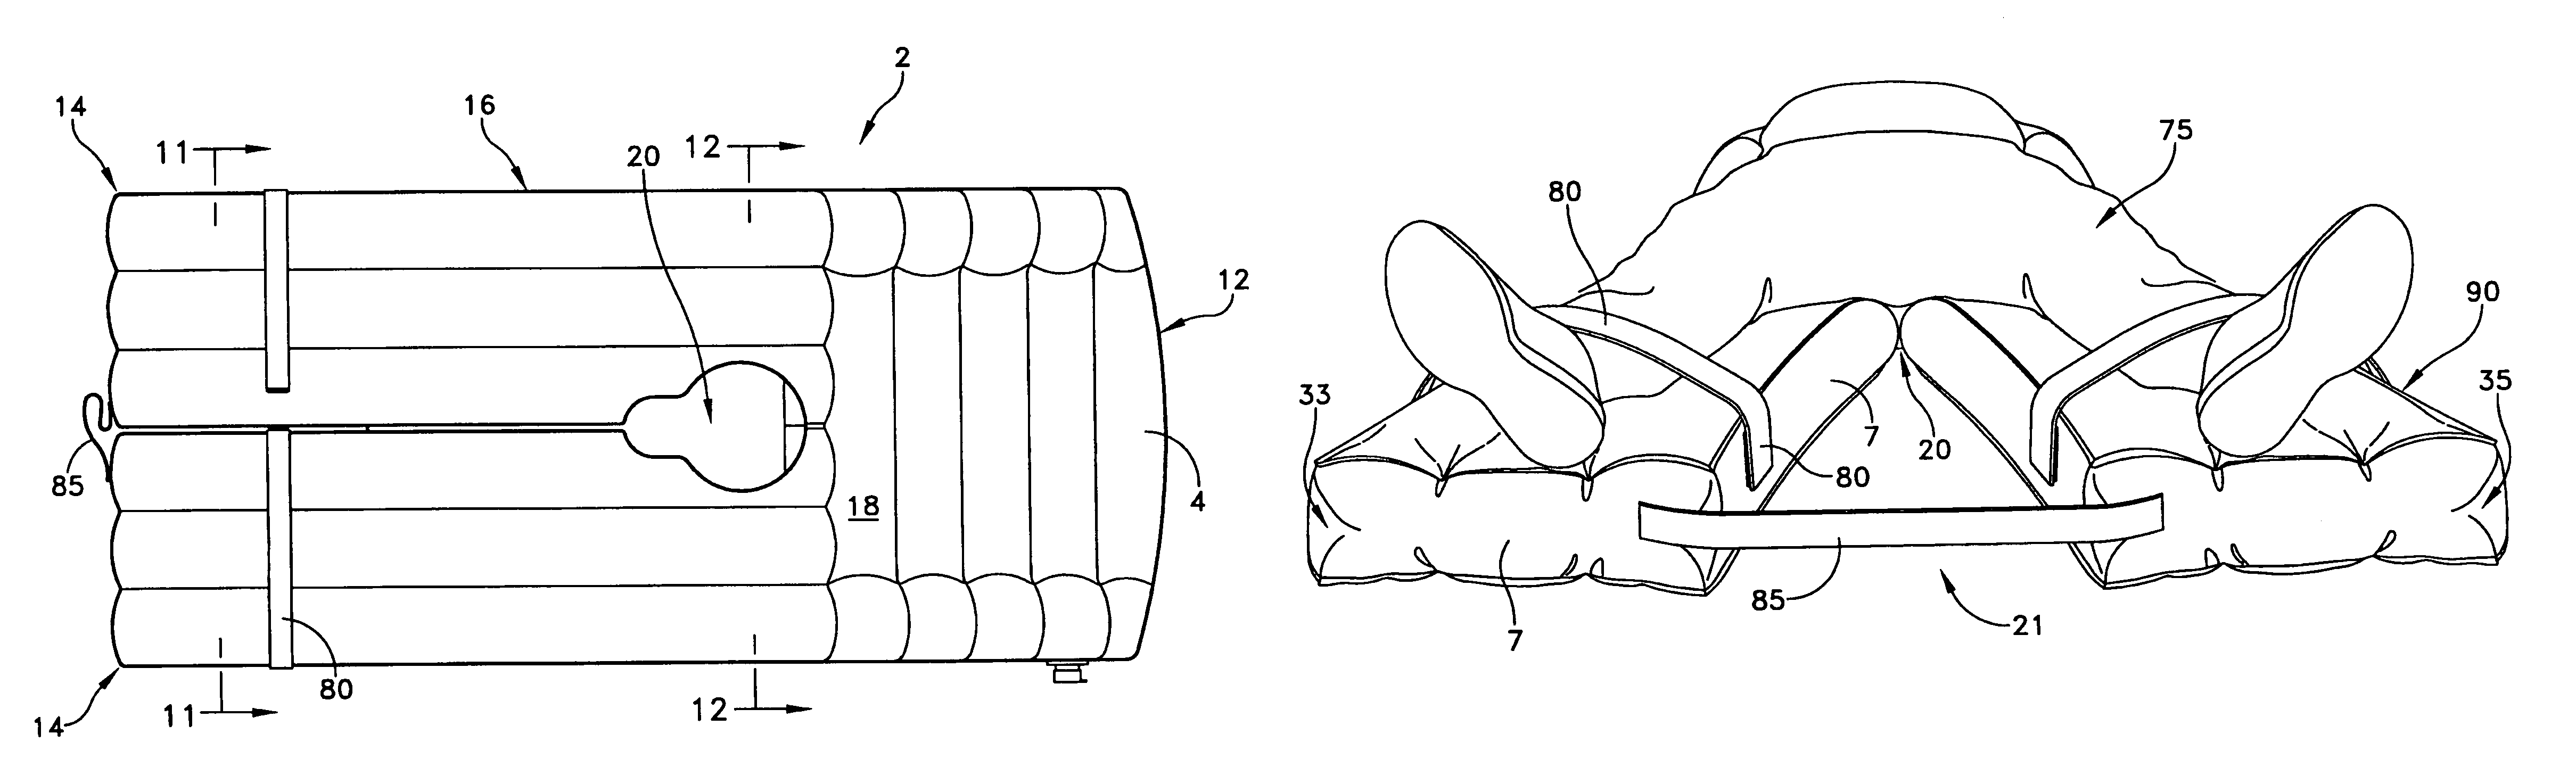 Inflatable transfer mattress